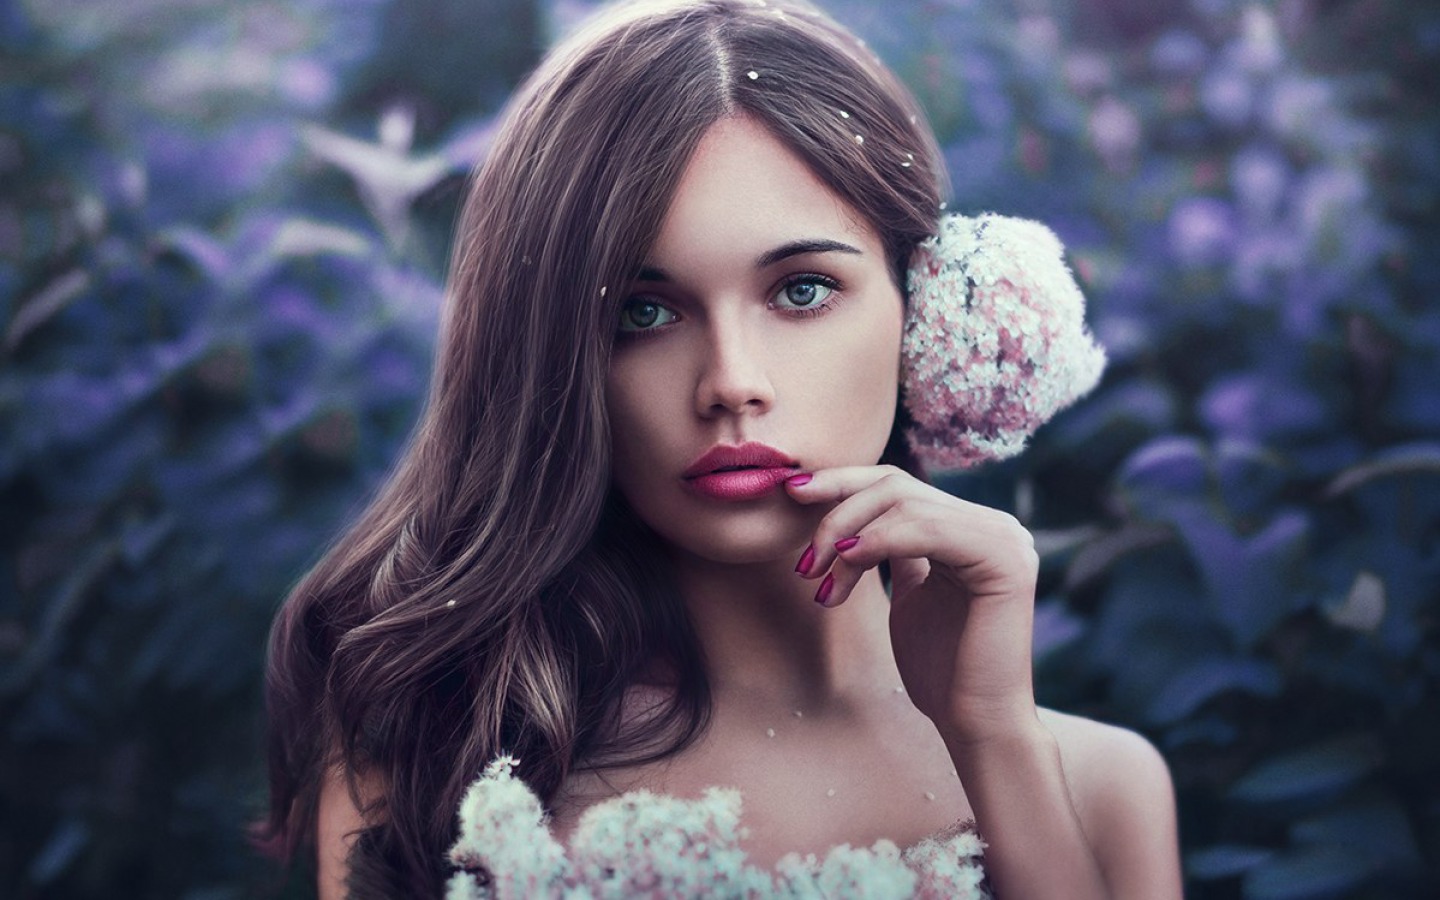 Pretty Girl by Danil Vasenev